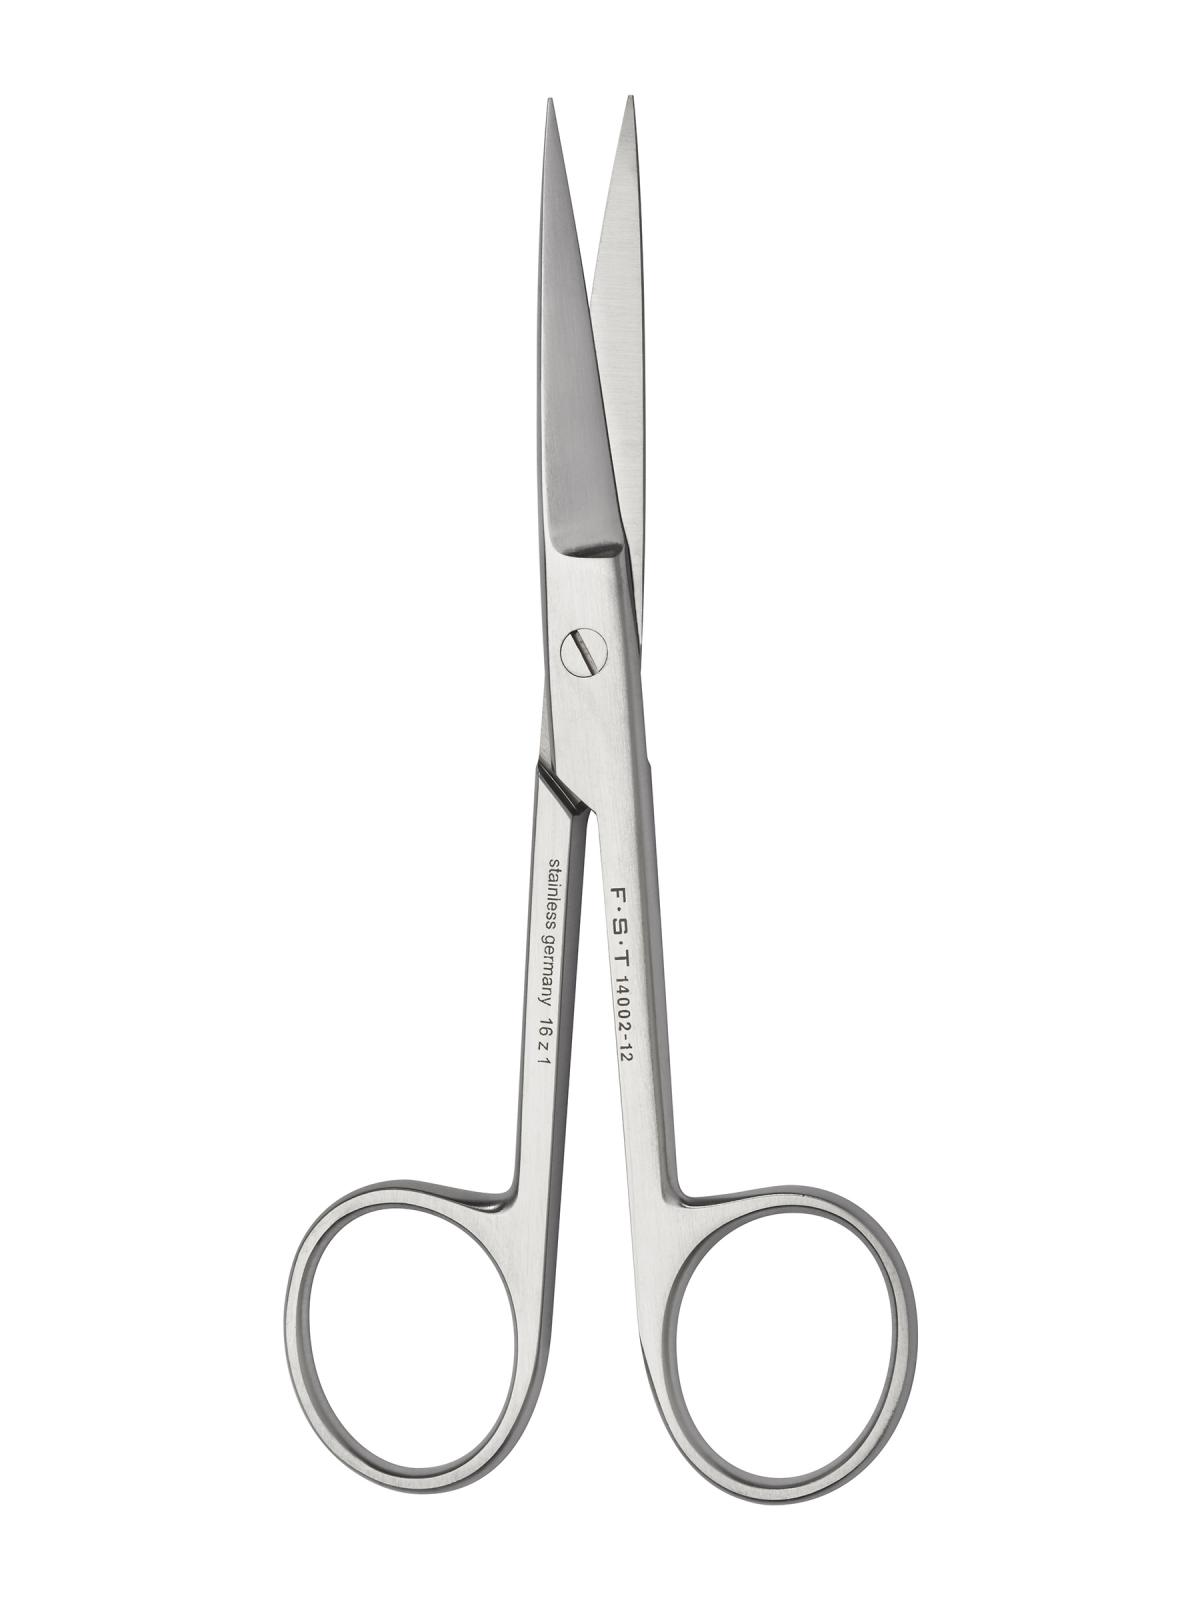 Surgical scissors - straight, sharp-sharp